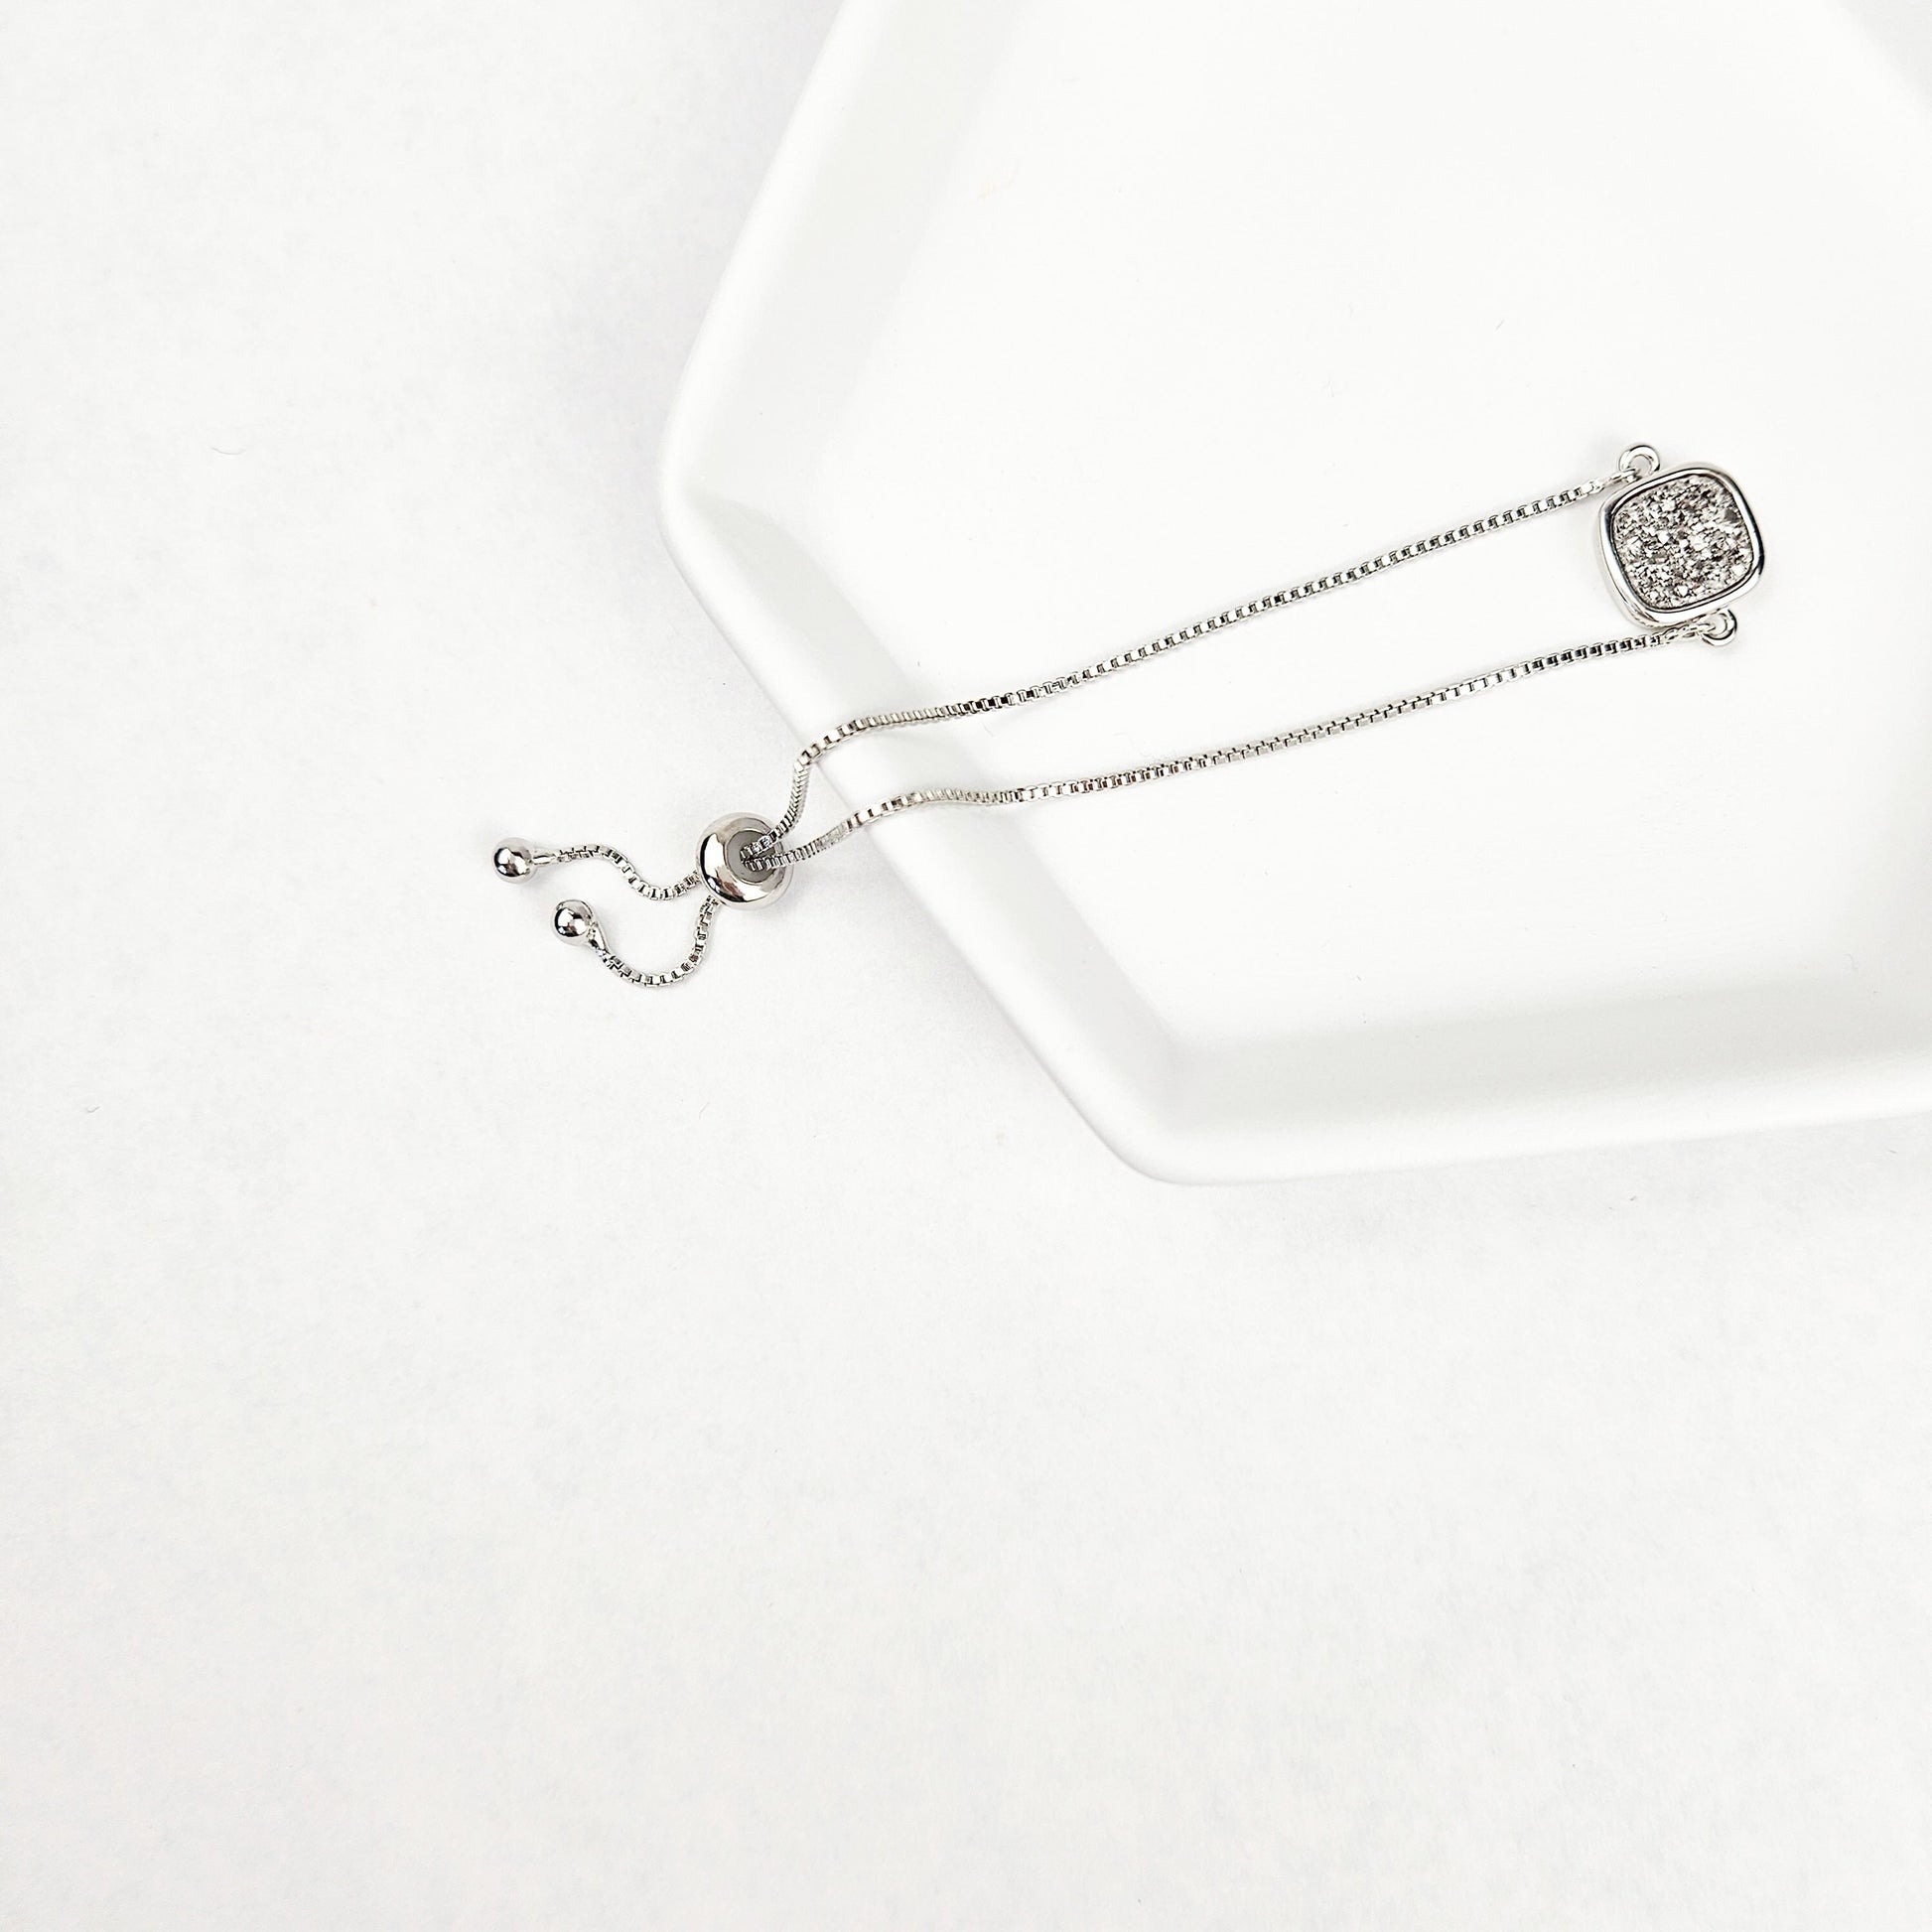 Adjustable Silver Druzy Quartz Crystal Bracelet